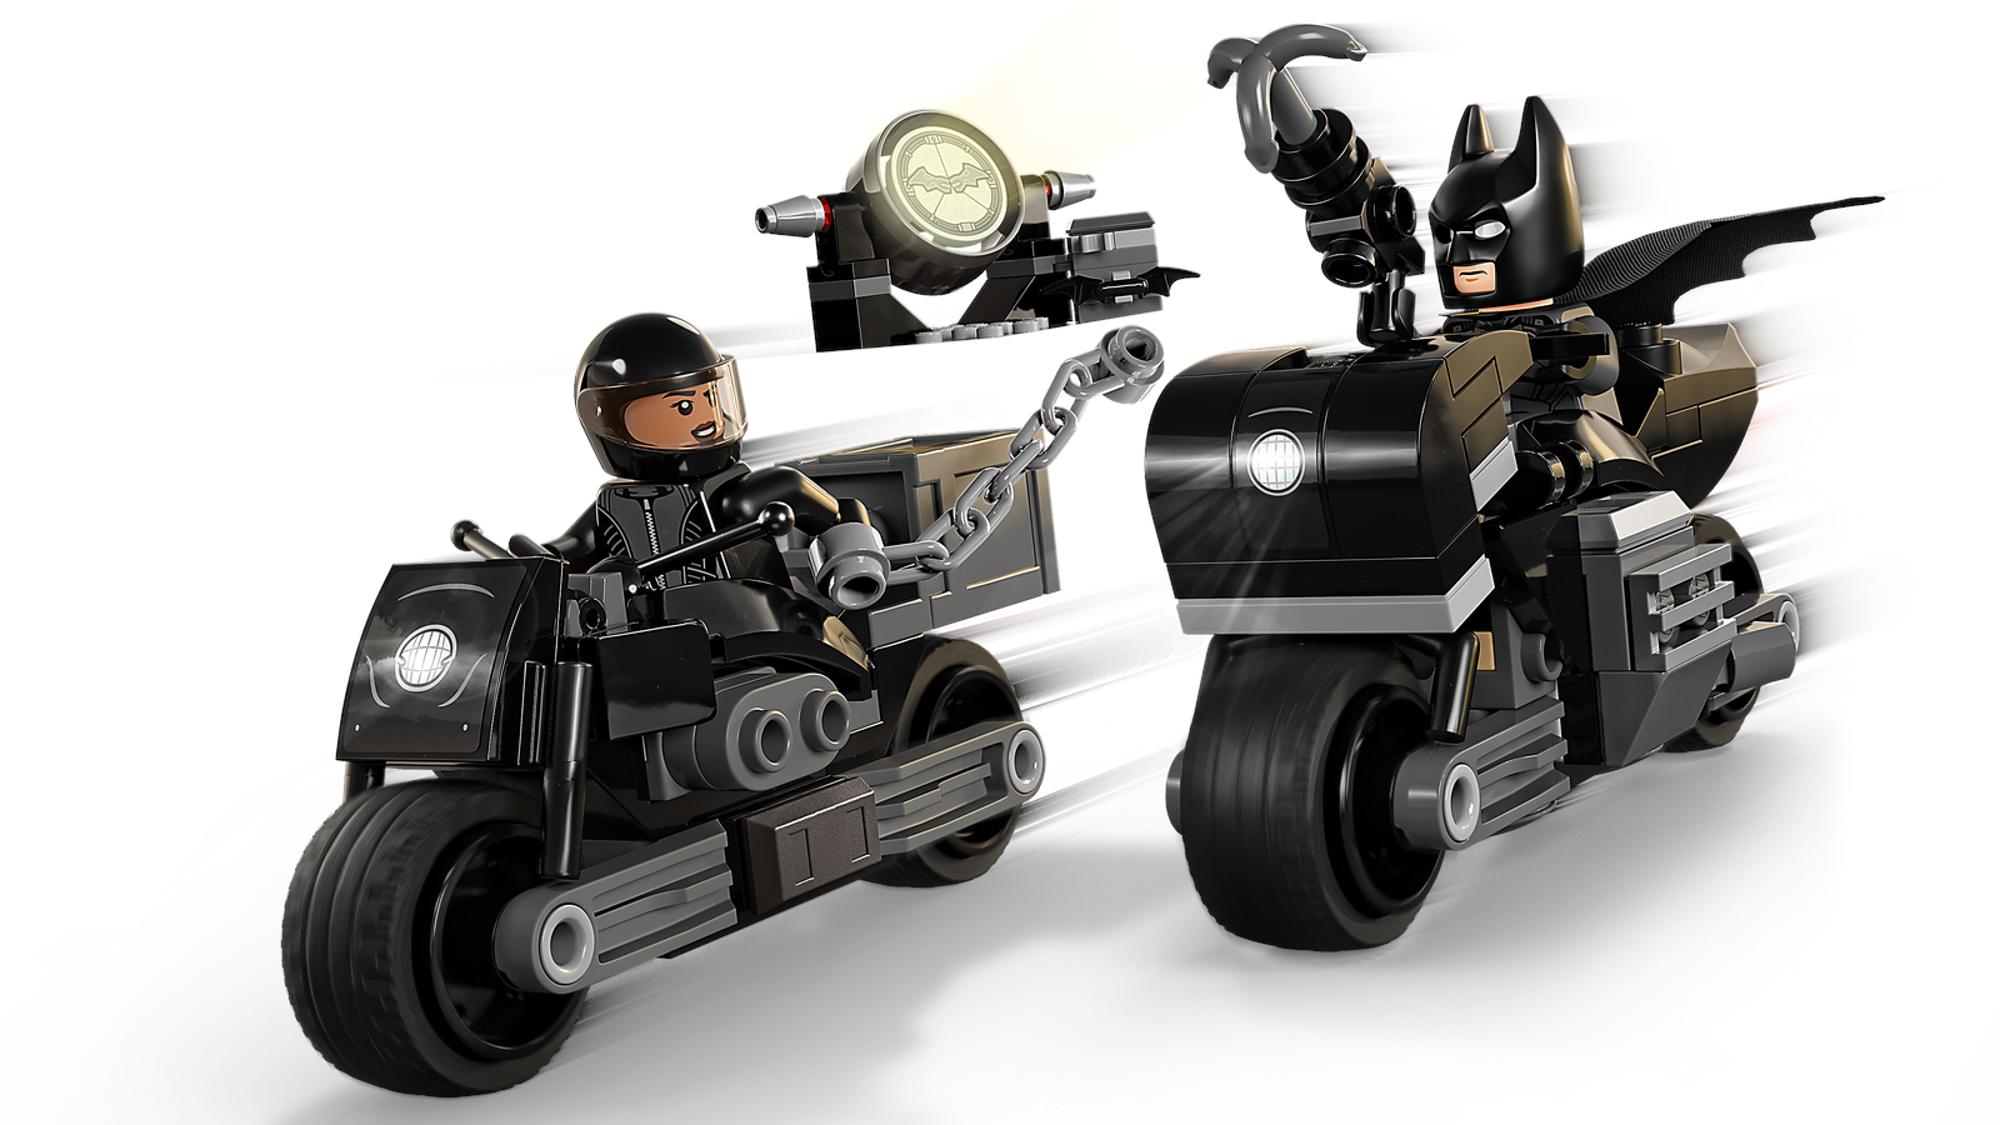 DC - Batman and Selina Kyle Motorcycle Pursuit